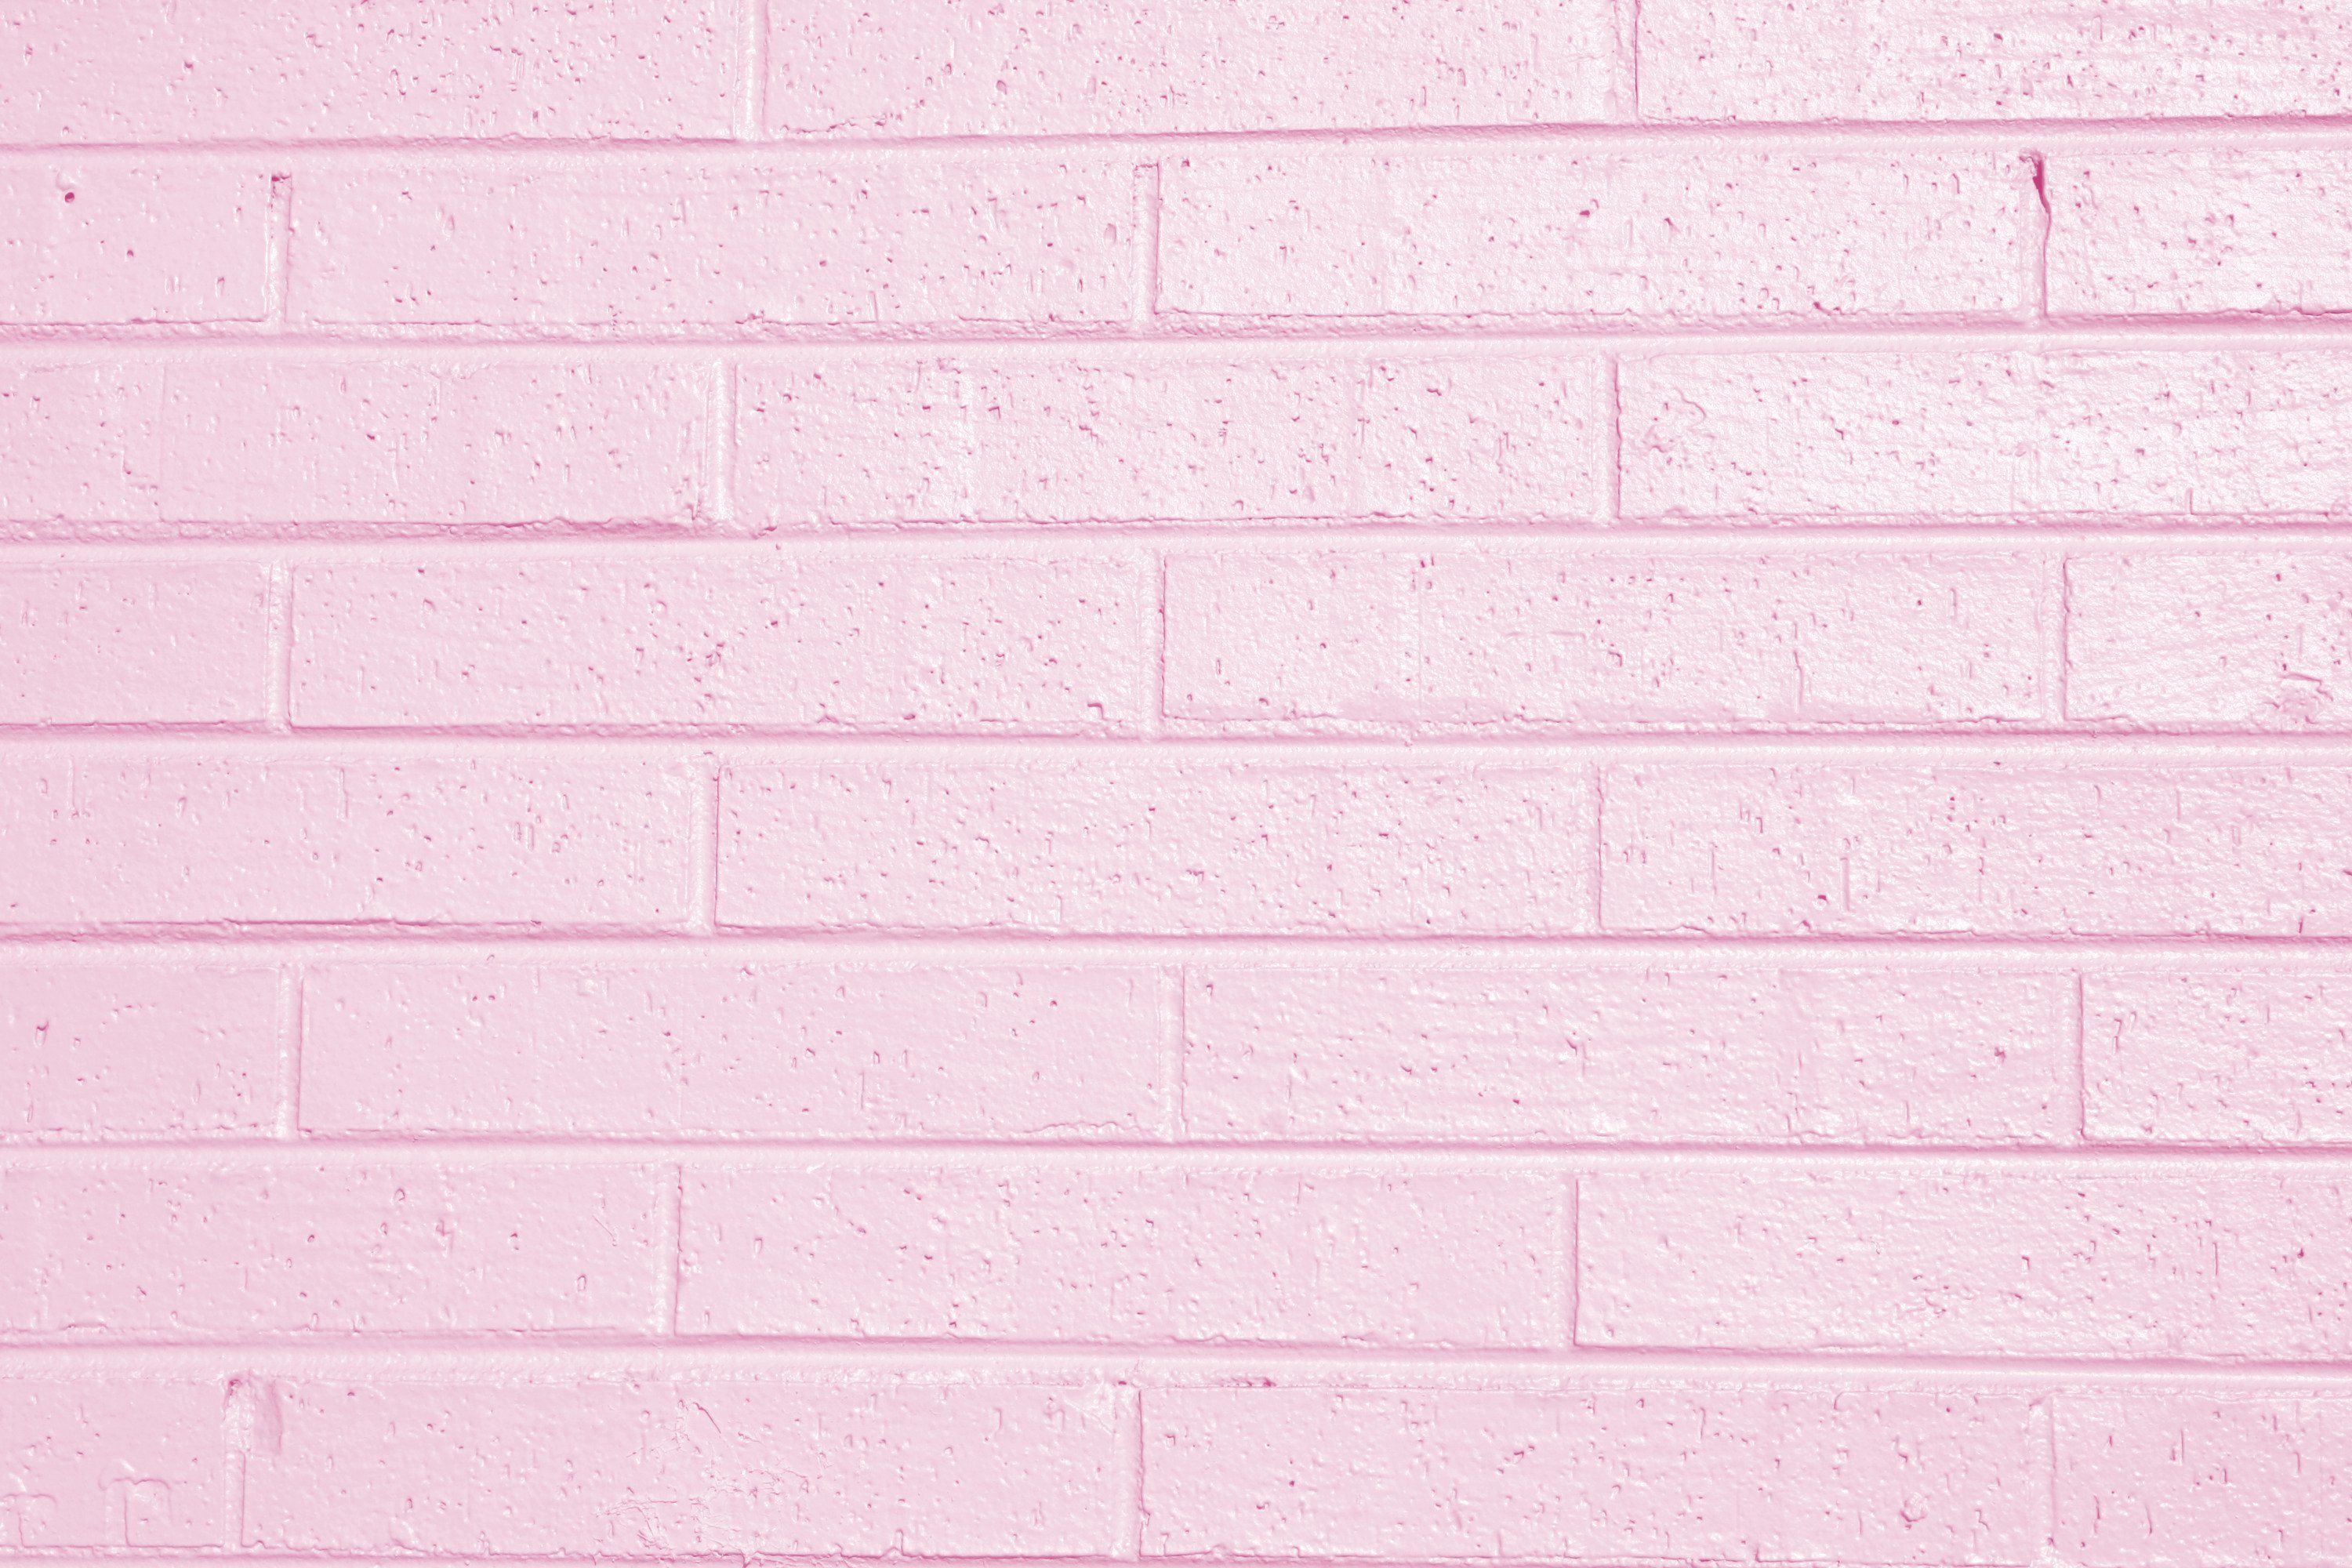 HD Light Pink Backgrounds | PixelsTalk.Net